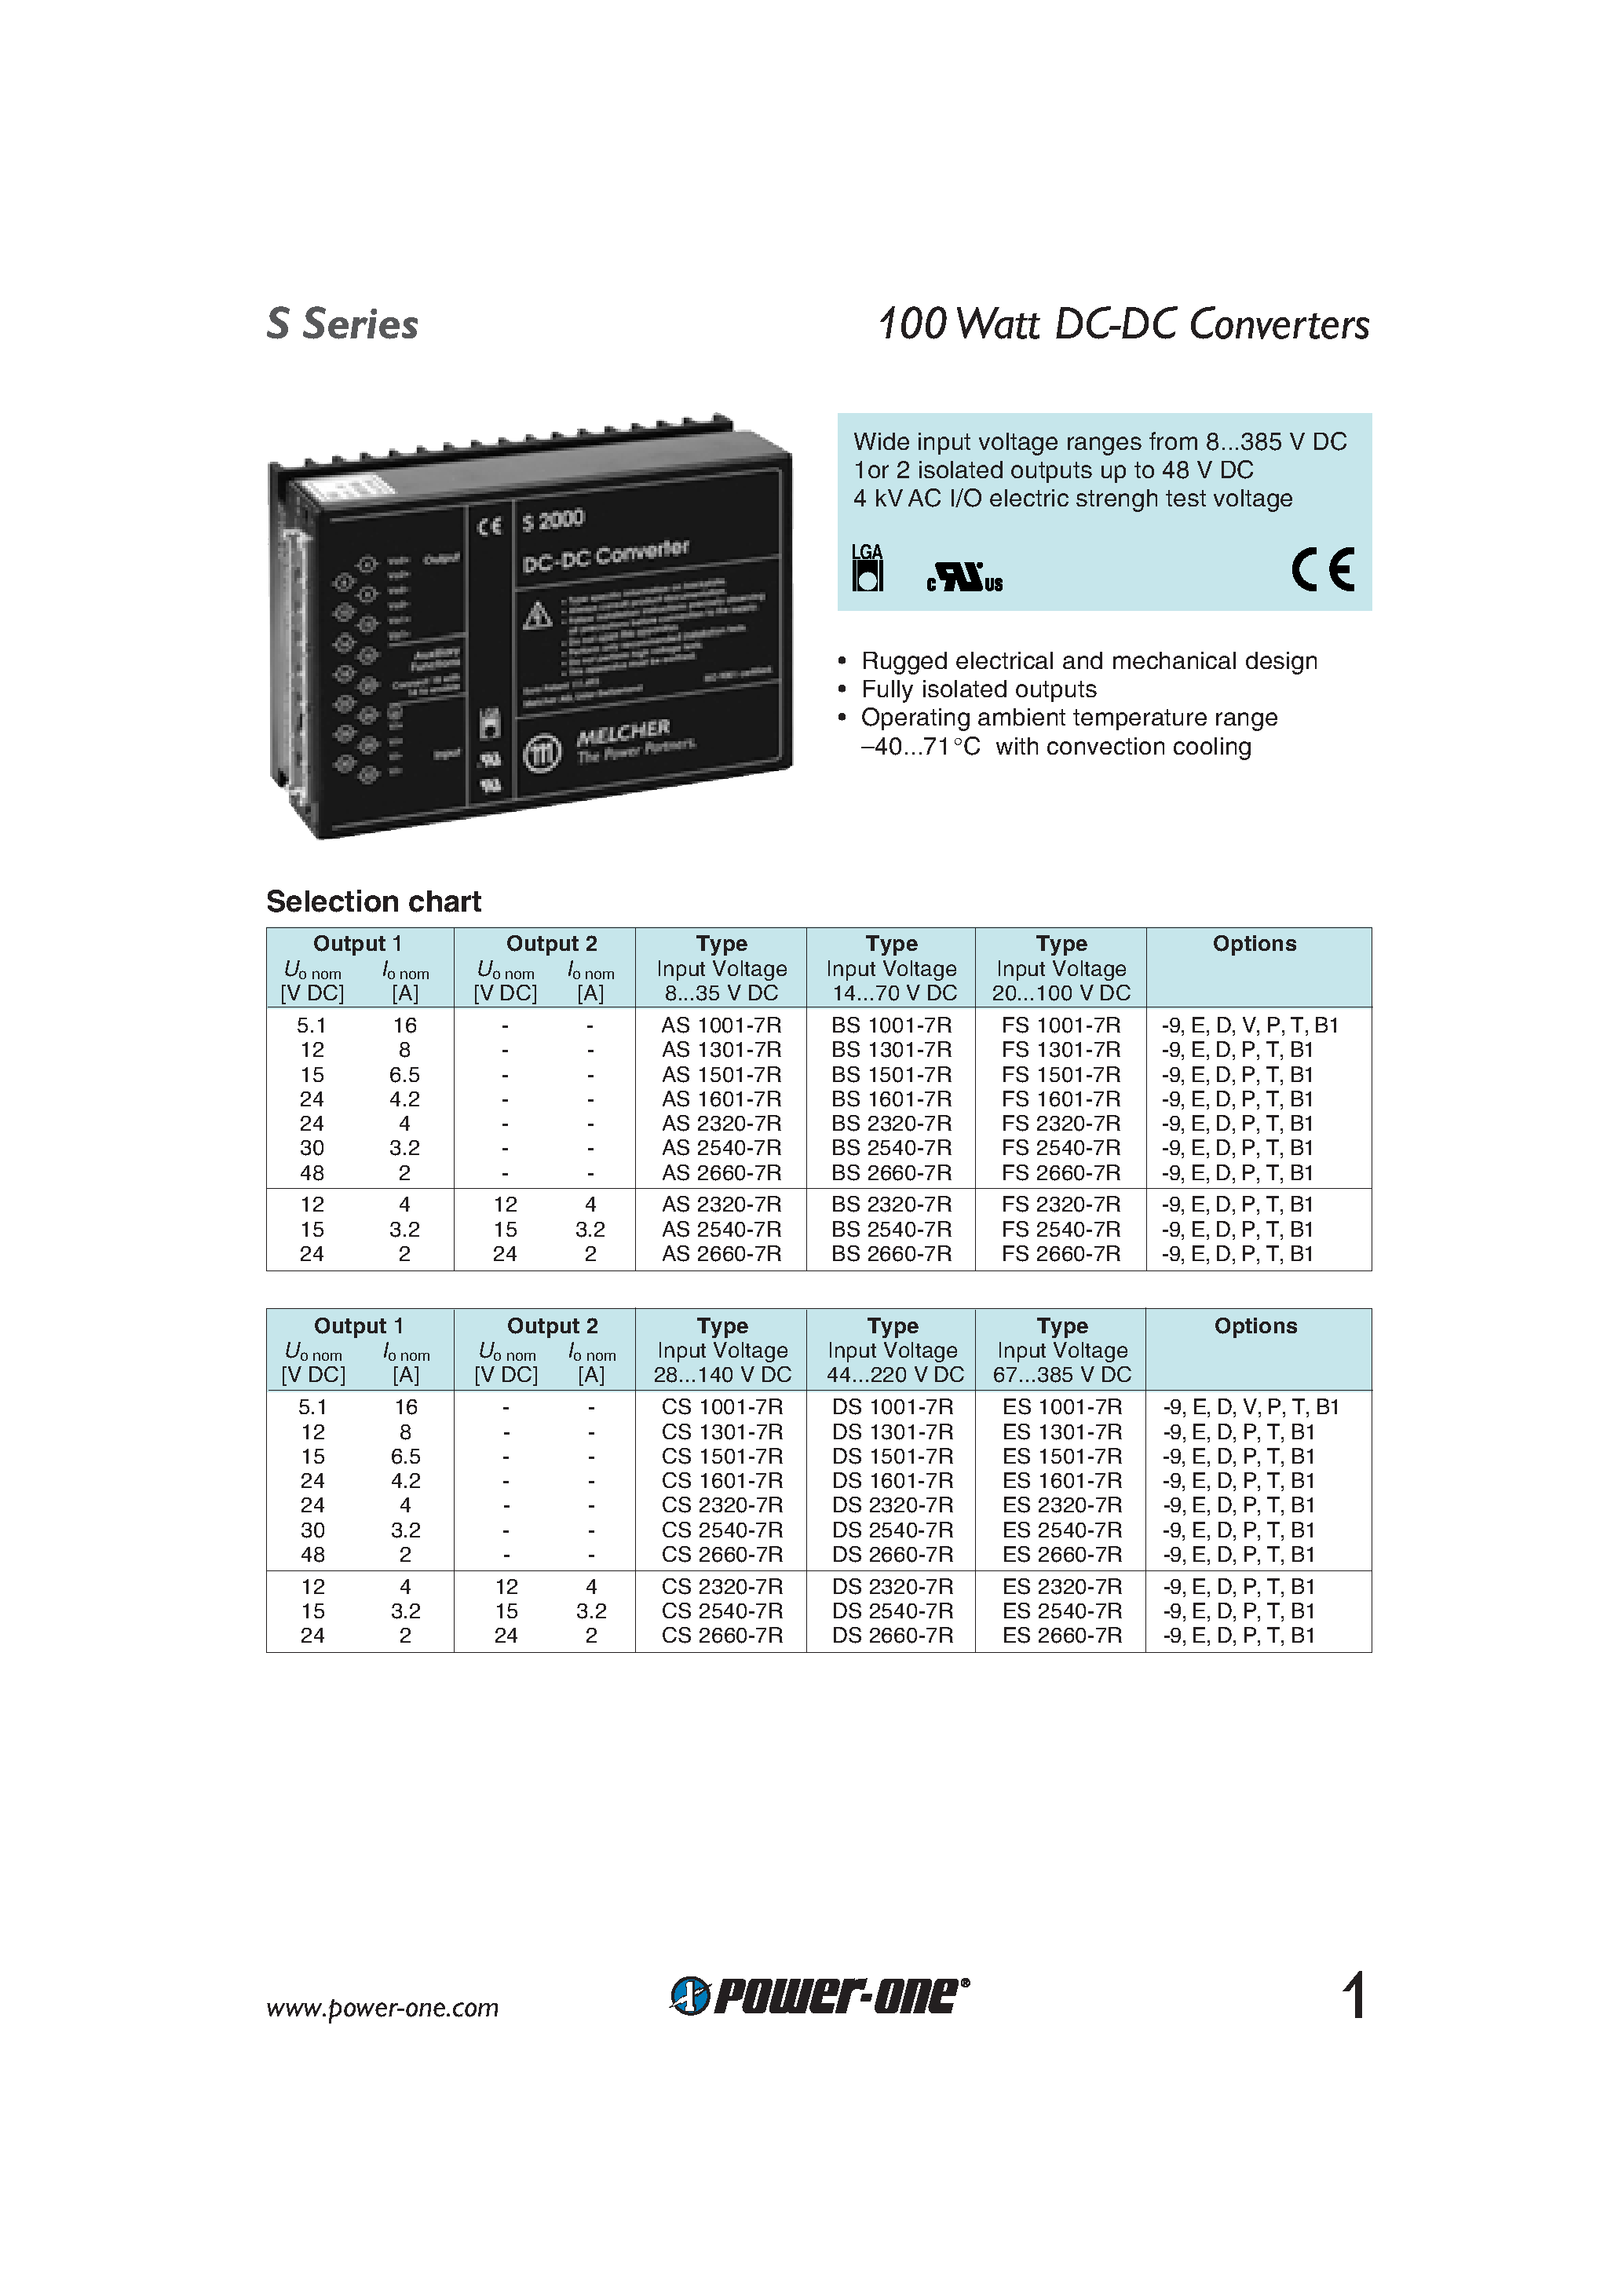 Datasheet CS2660-7R - 100 Watt DC-DC Converters page 1